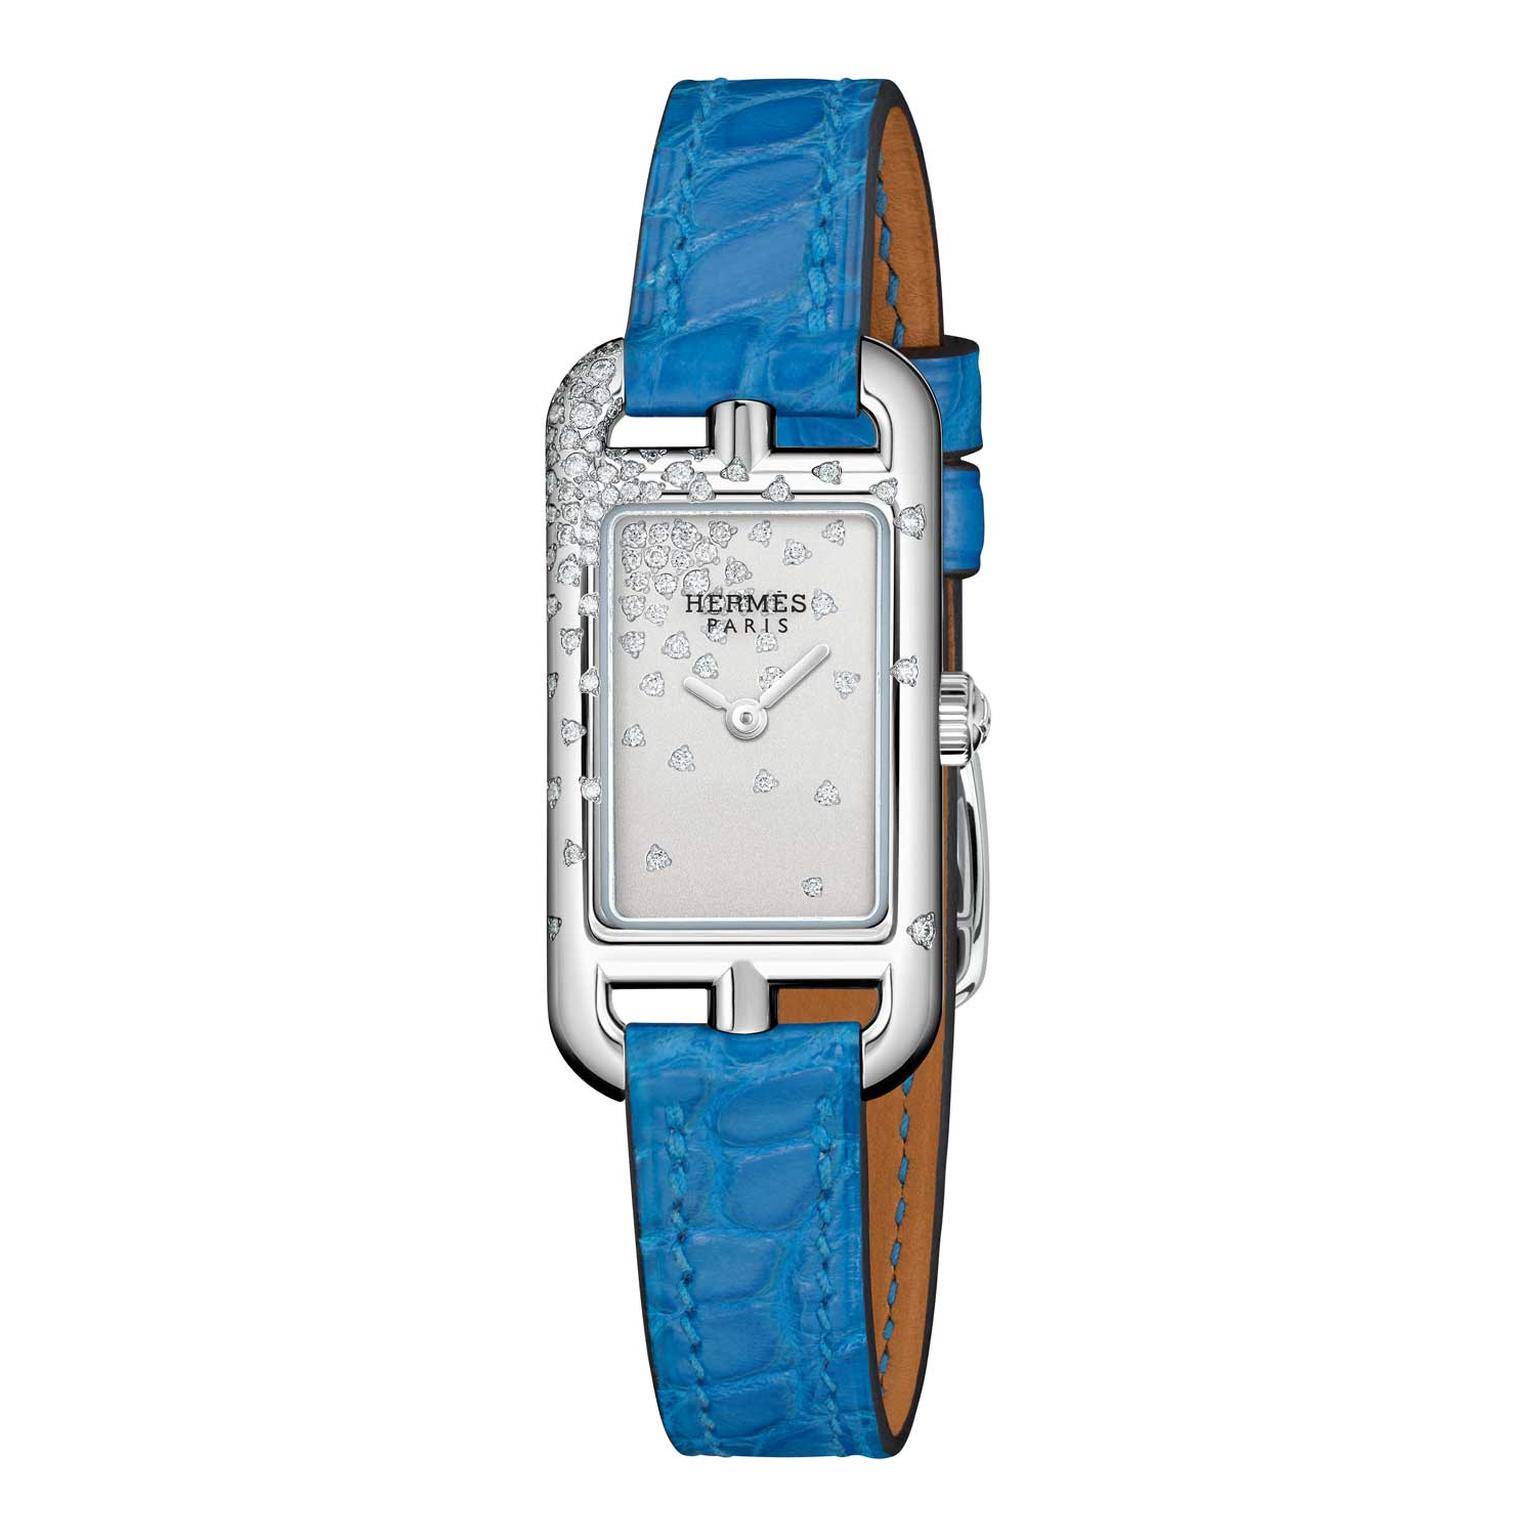 Hermes Nantucket Jete de diamants watch with blue alligator leather strap